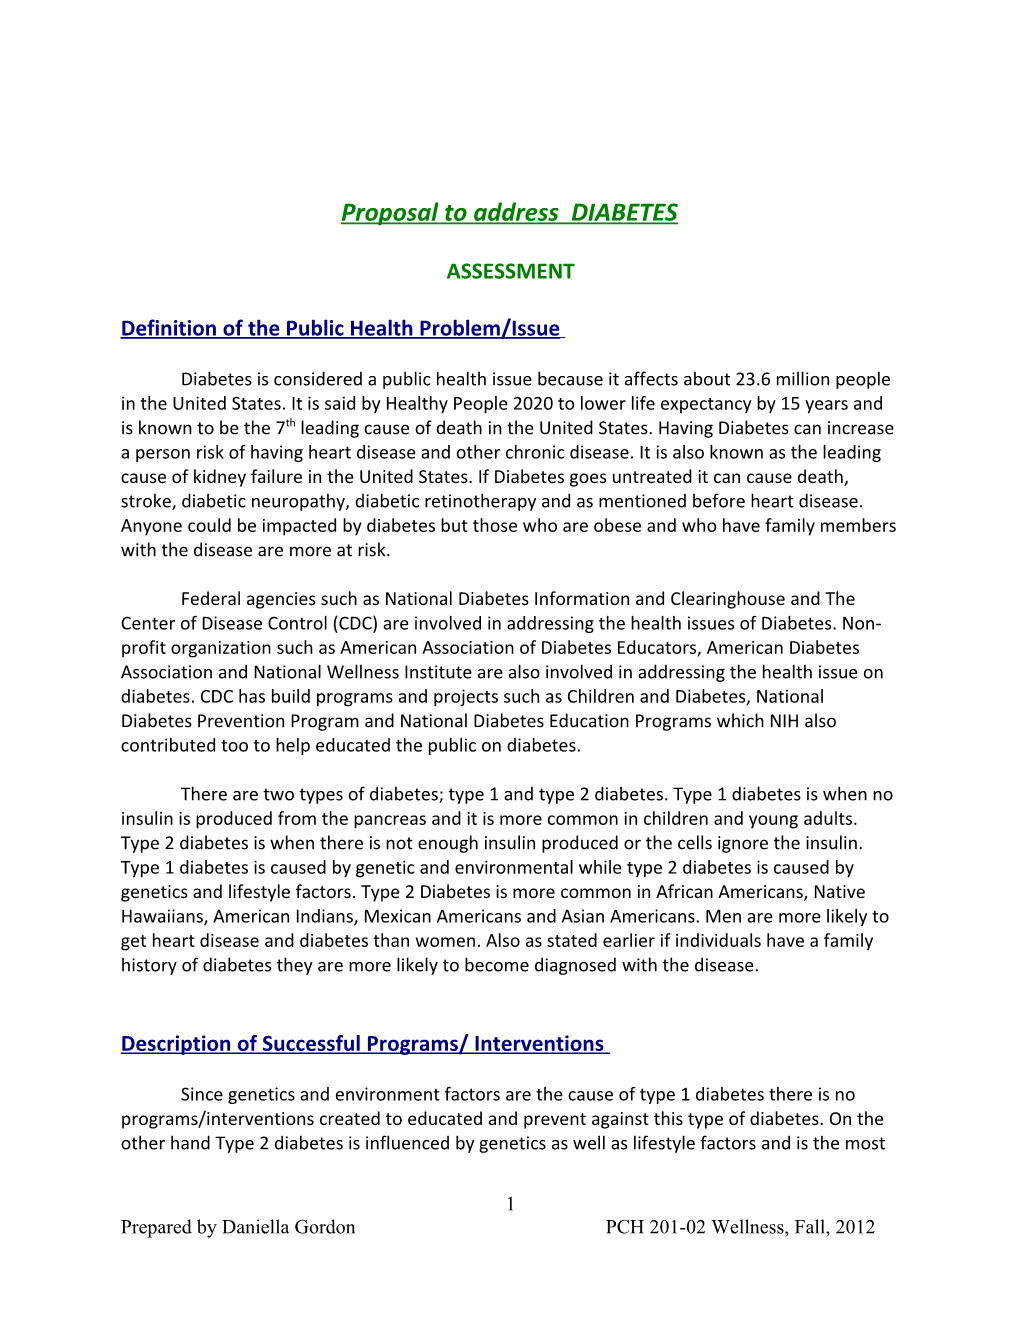 Proposal to Address DIABETES